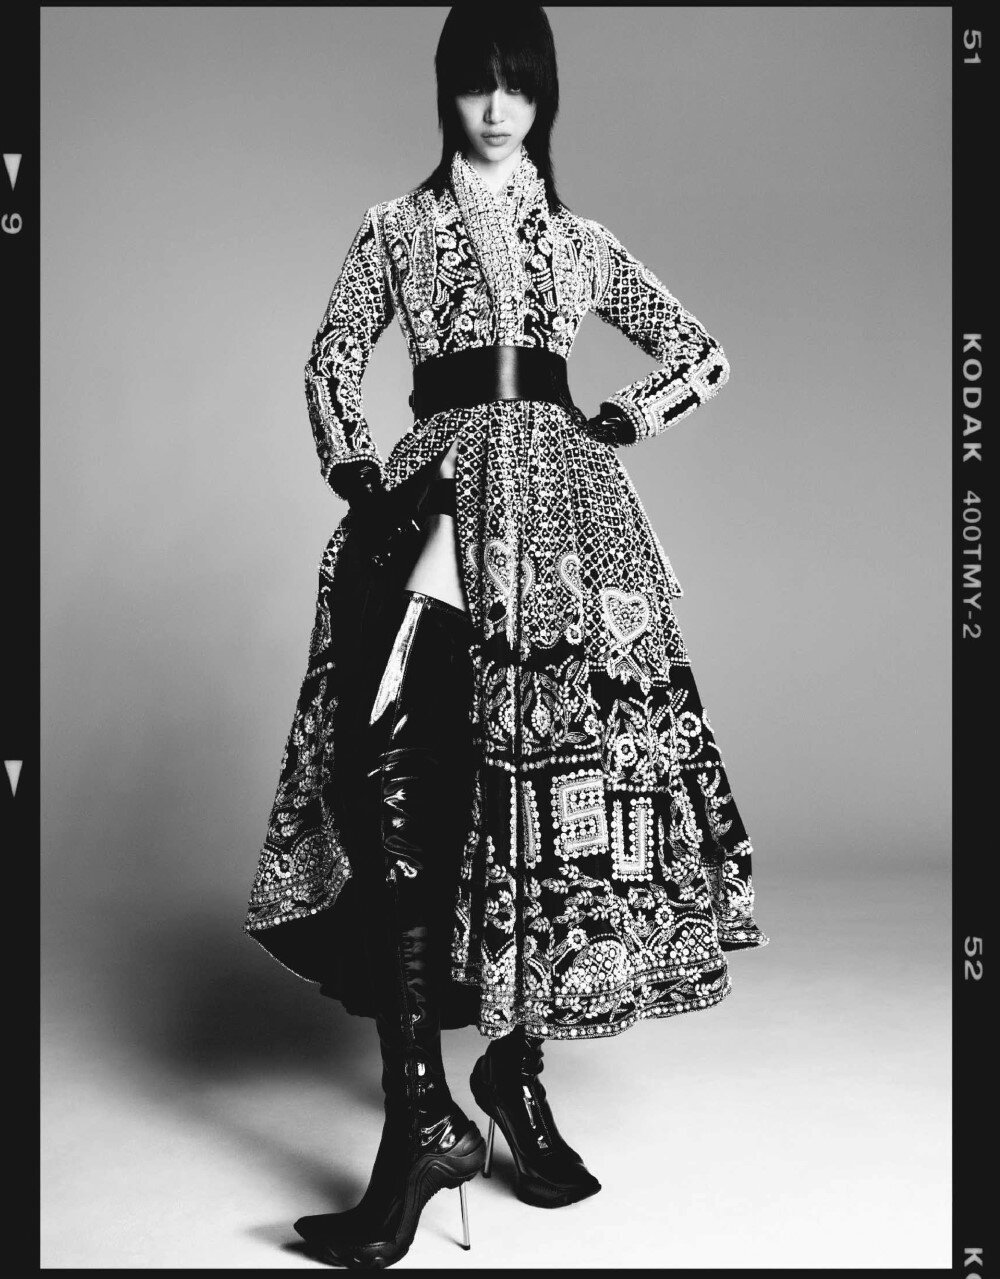 Luigi Iango Vogue Japan Aug 2020 Fashion Story (11).jpg